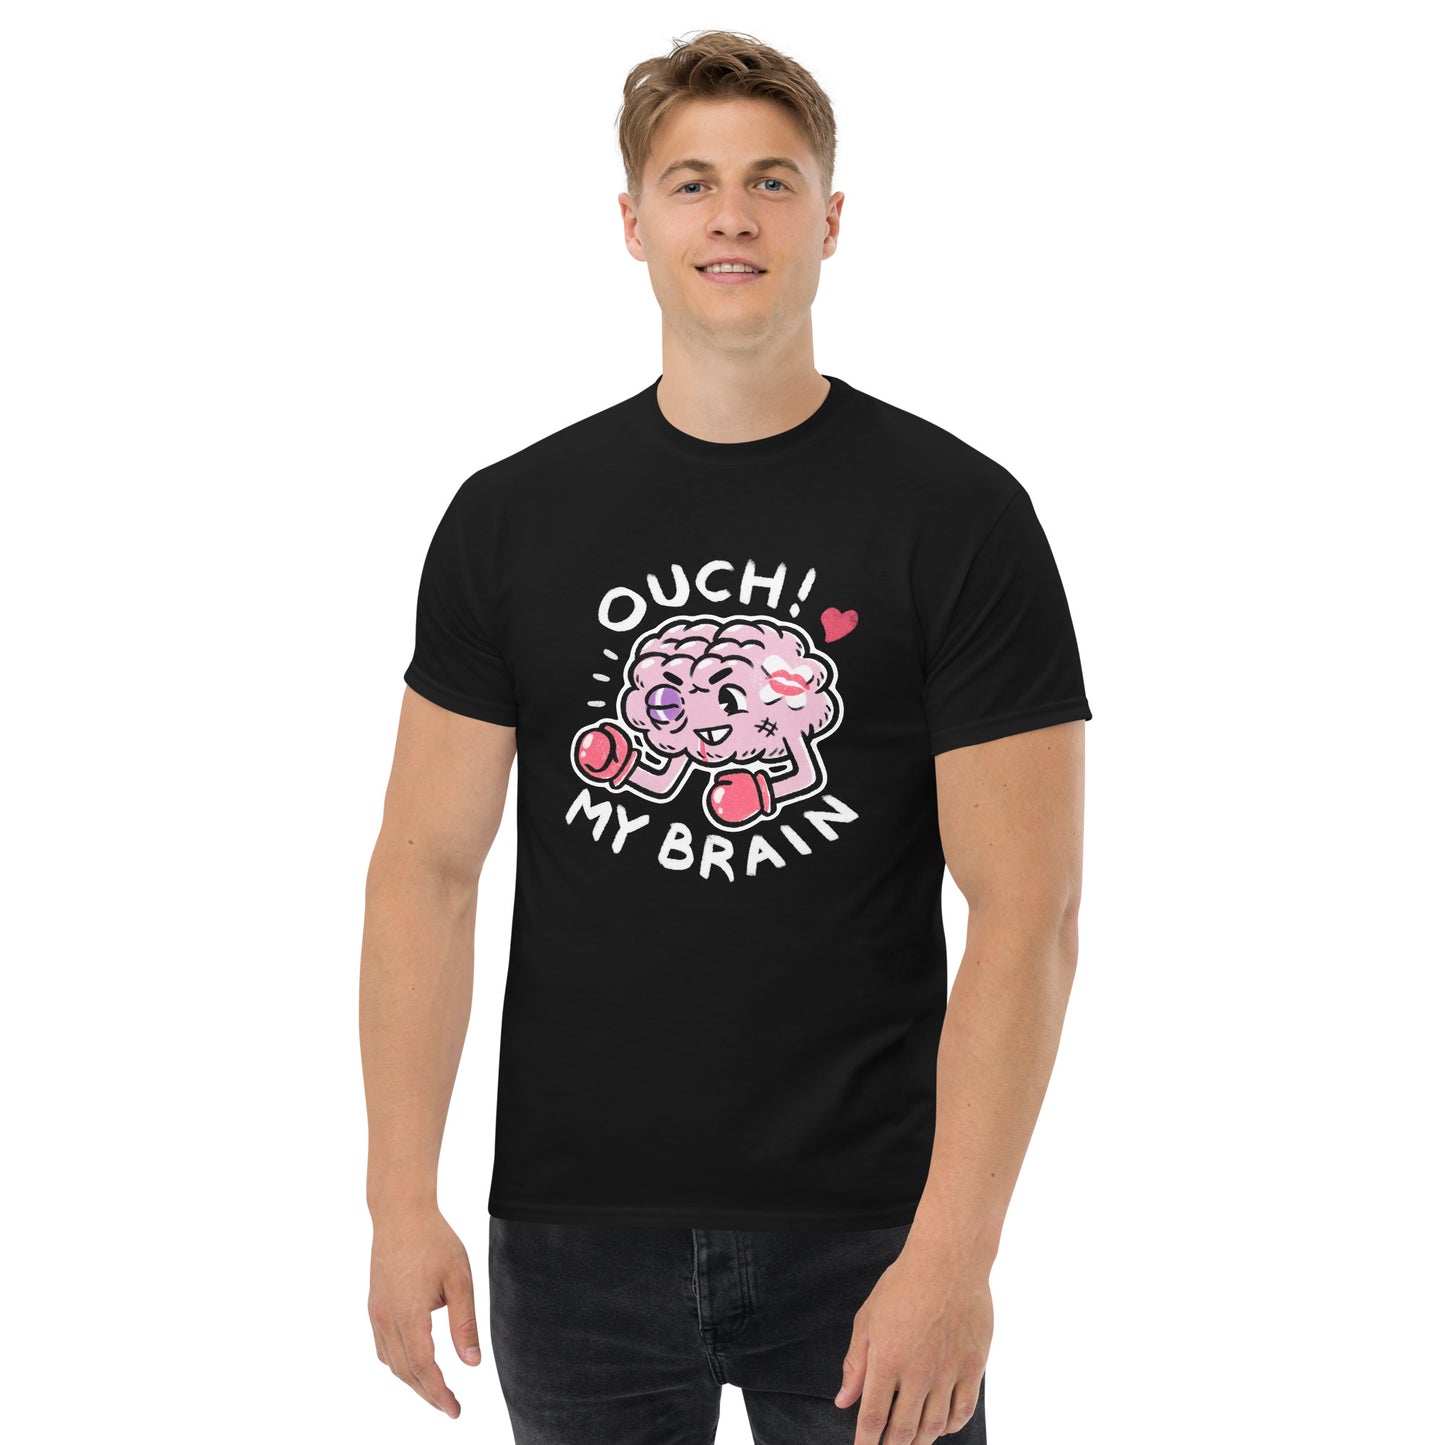 'Ouch! My Brain' T-Shirt